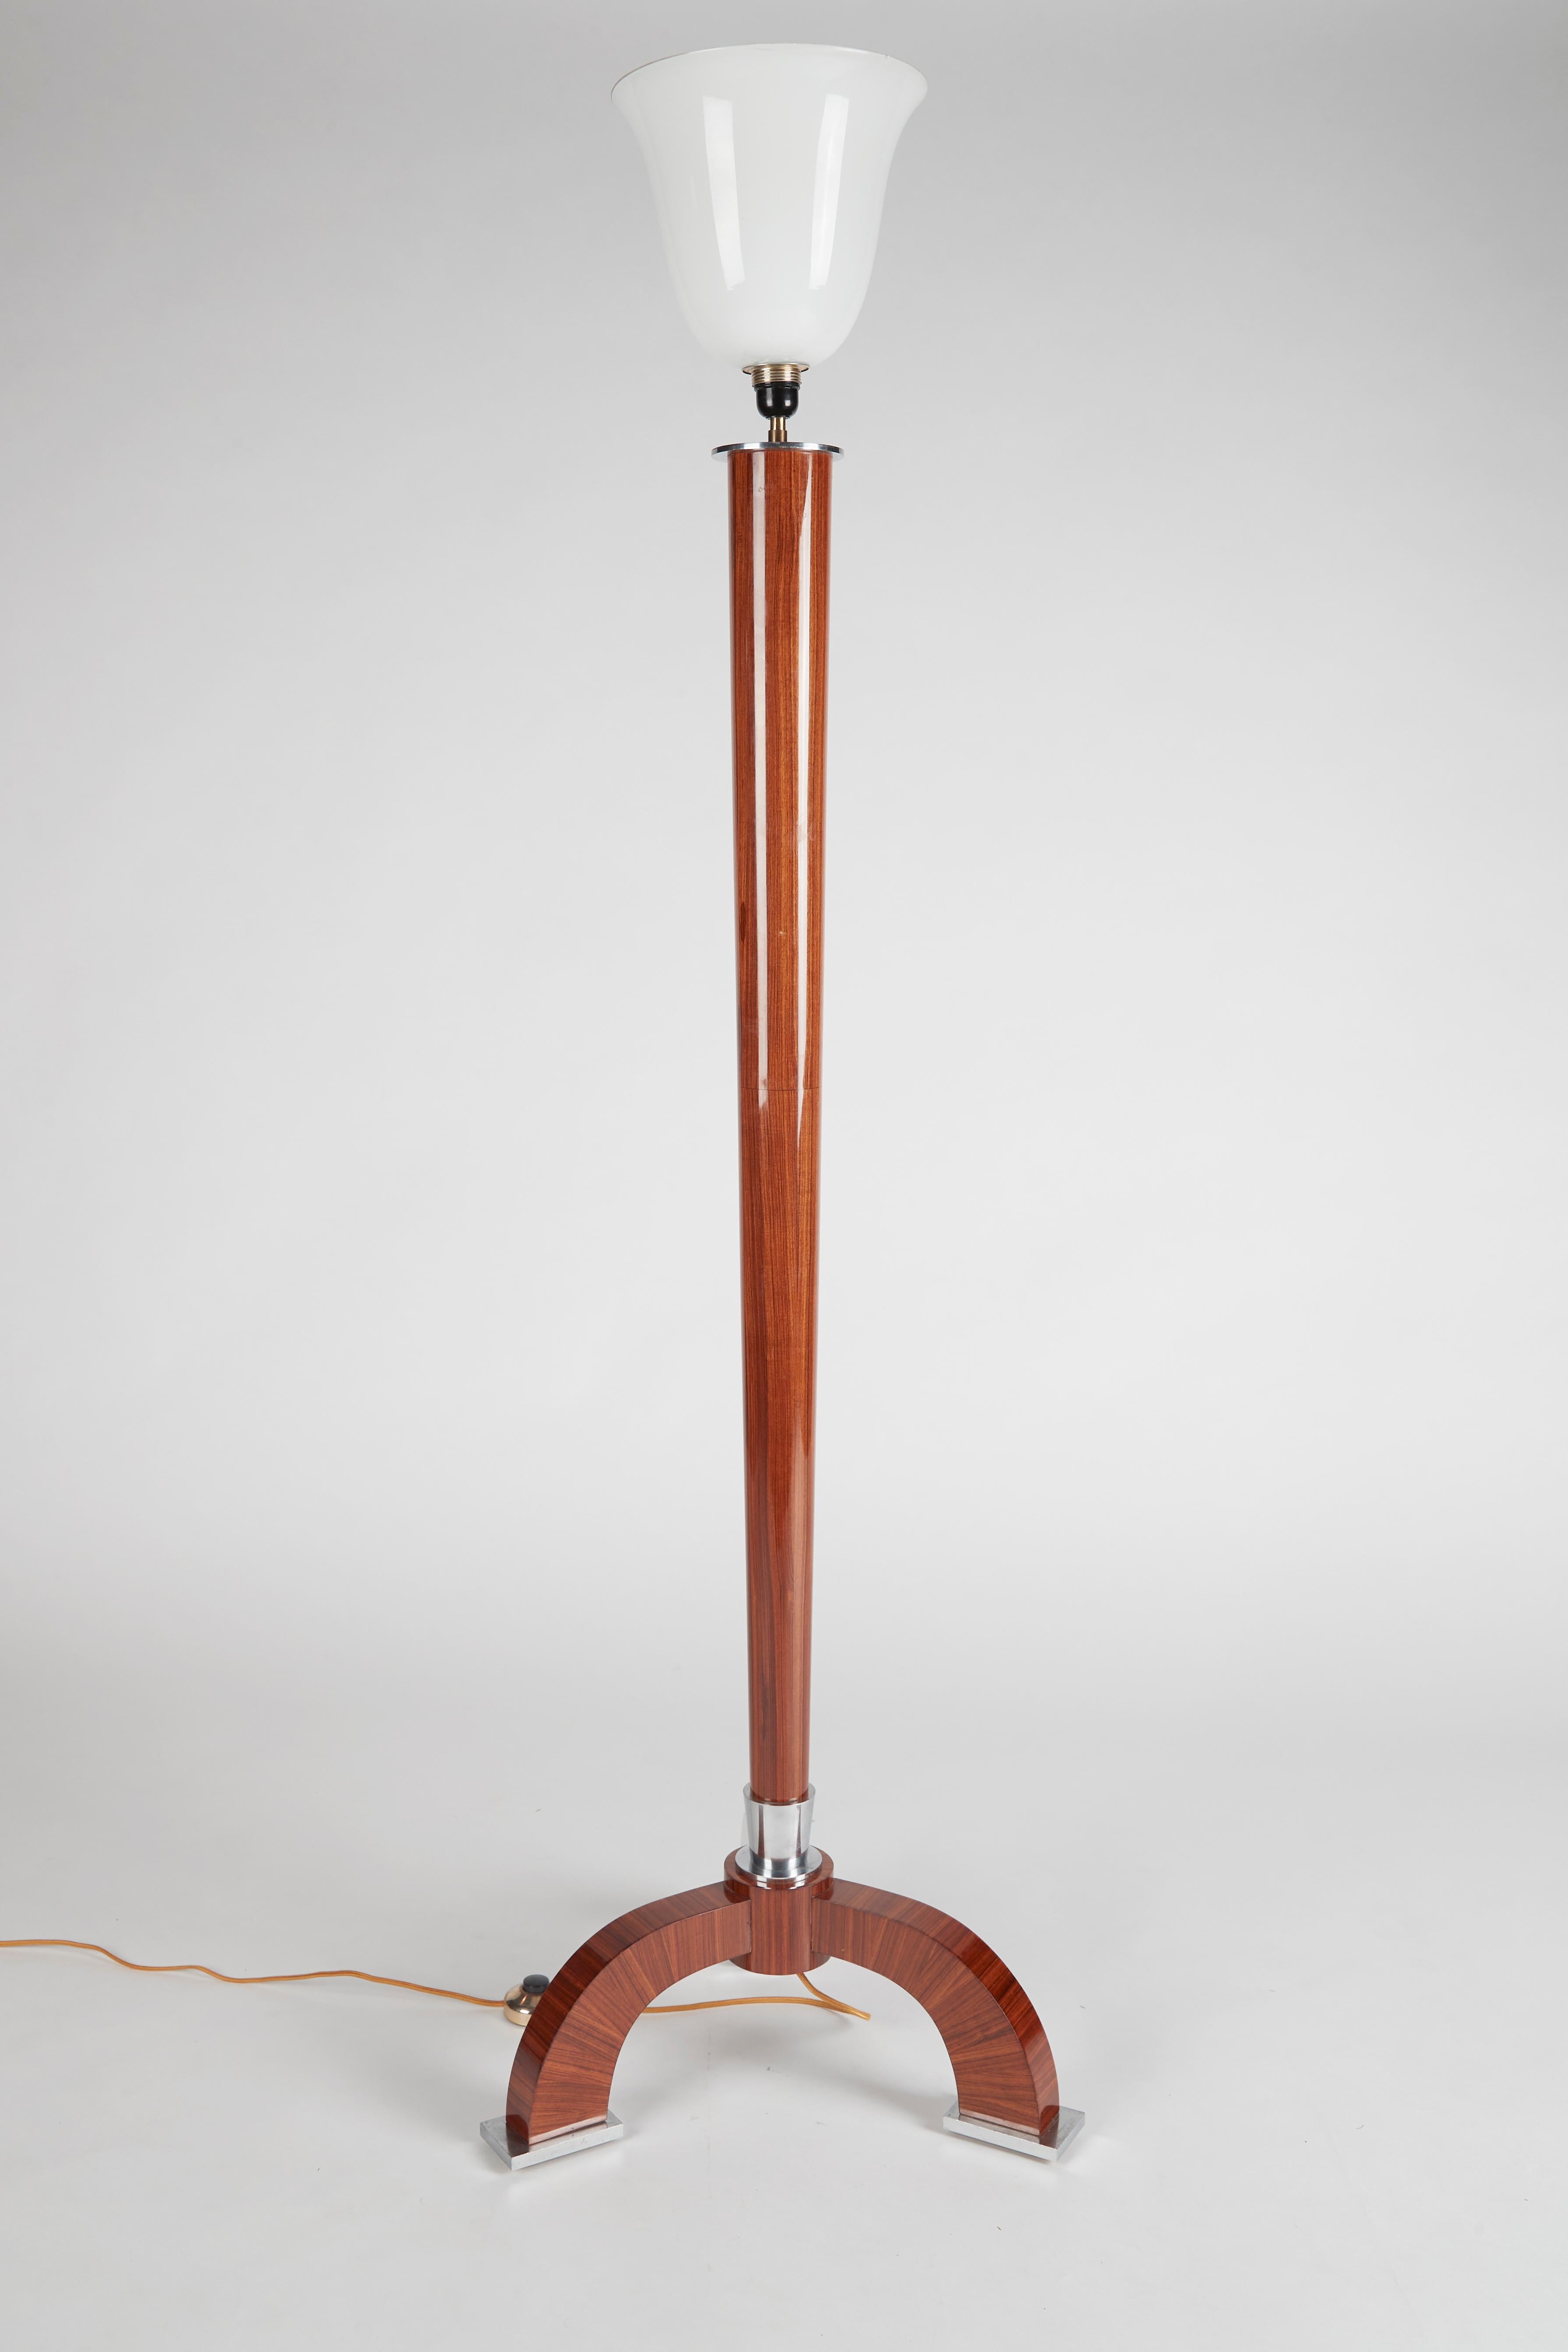 20th Century Jules Leleu, Art Deco Tripodal Floor Lamp, Walnut and Chrome, France, circa 1930 For Sale